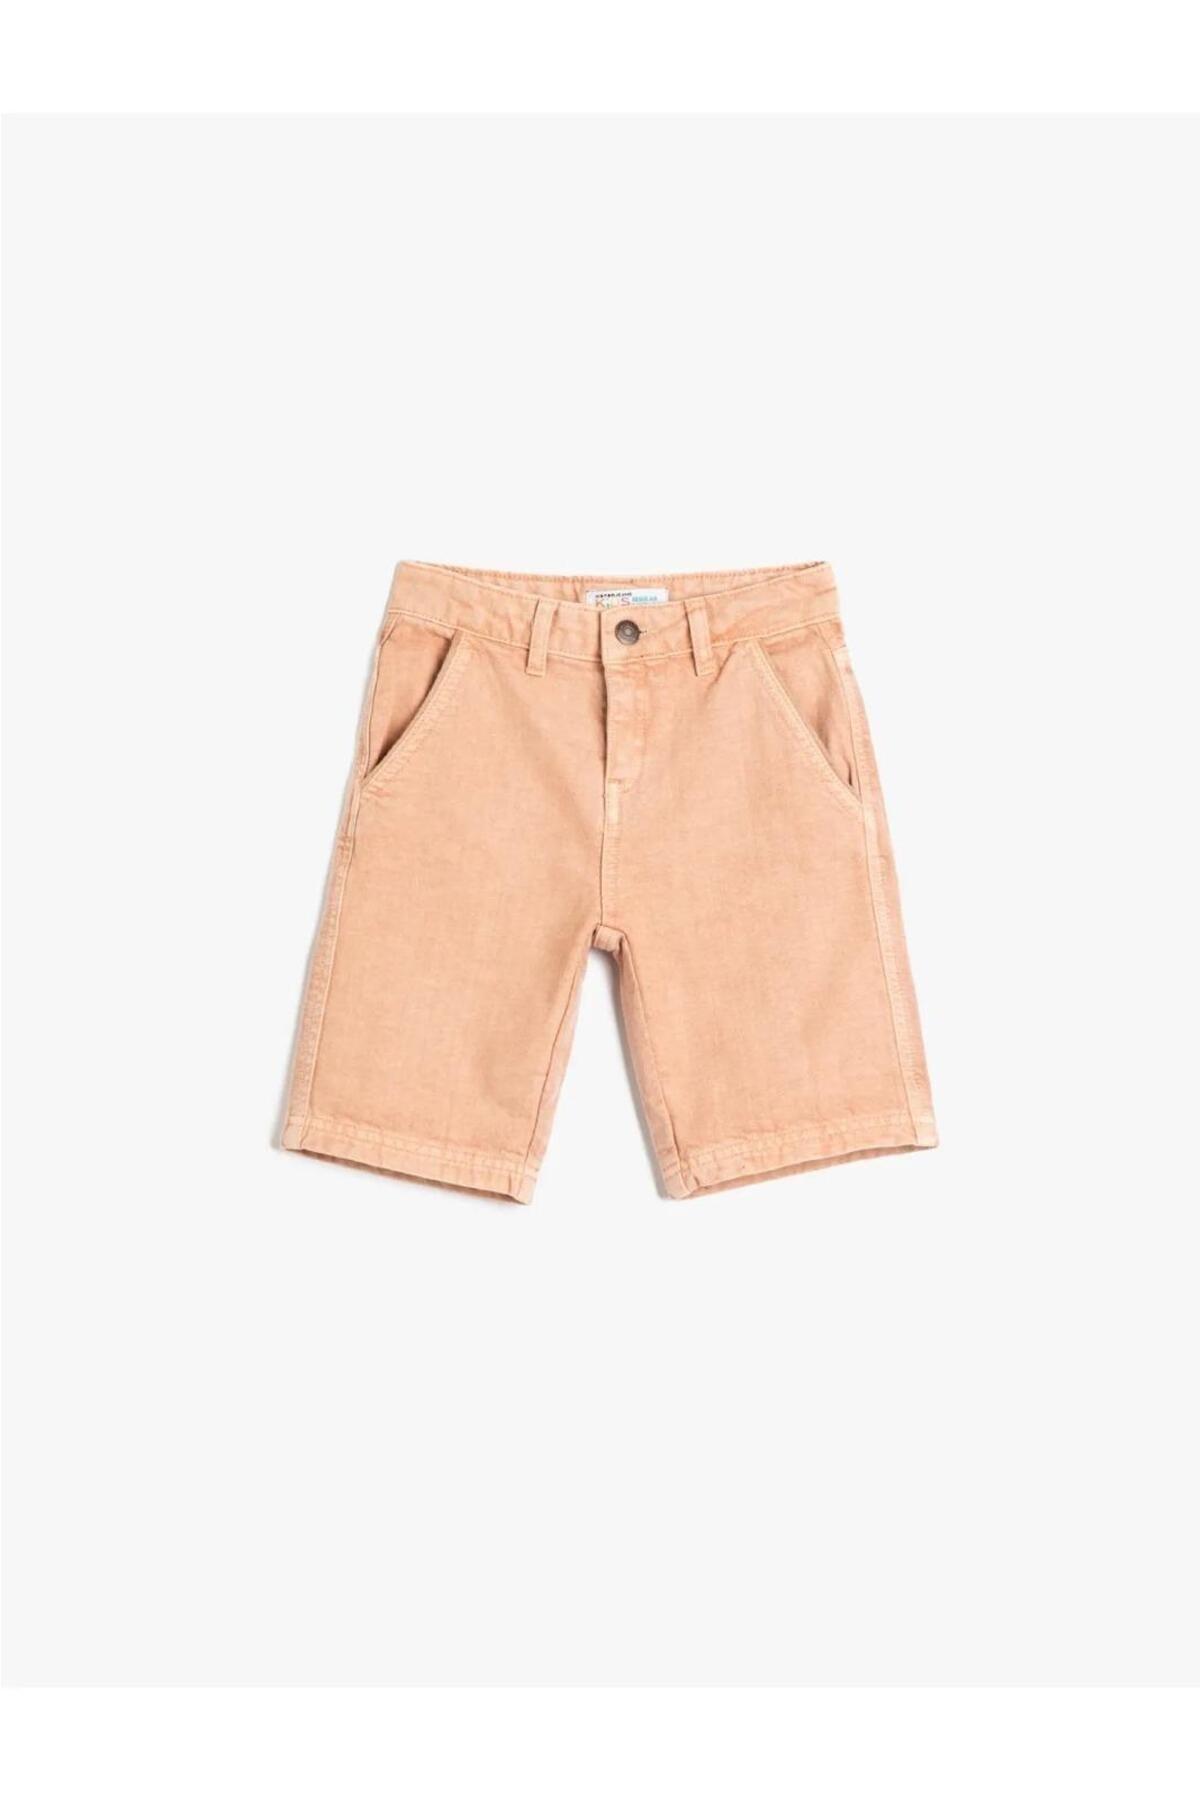 Koton - Orange Denim Shorts, Kids Unisex